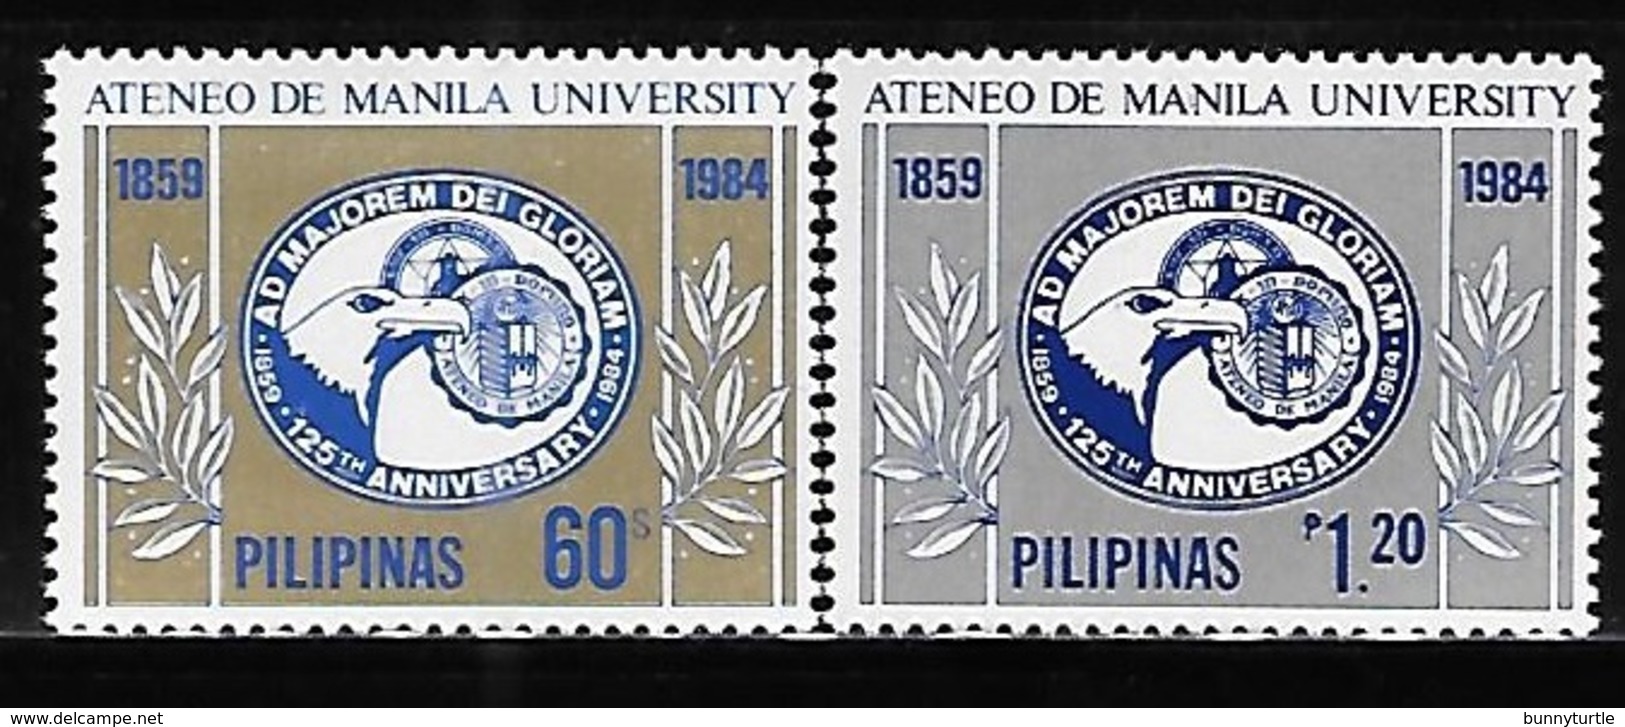 Philippines 1984 Ateneo De Manila University MNH - Filipinas